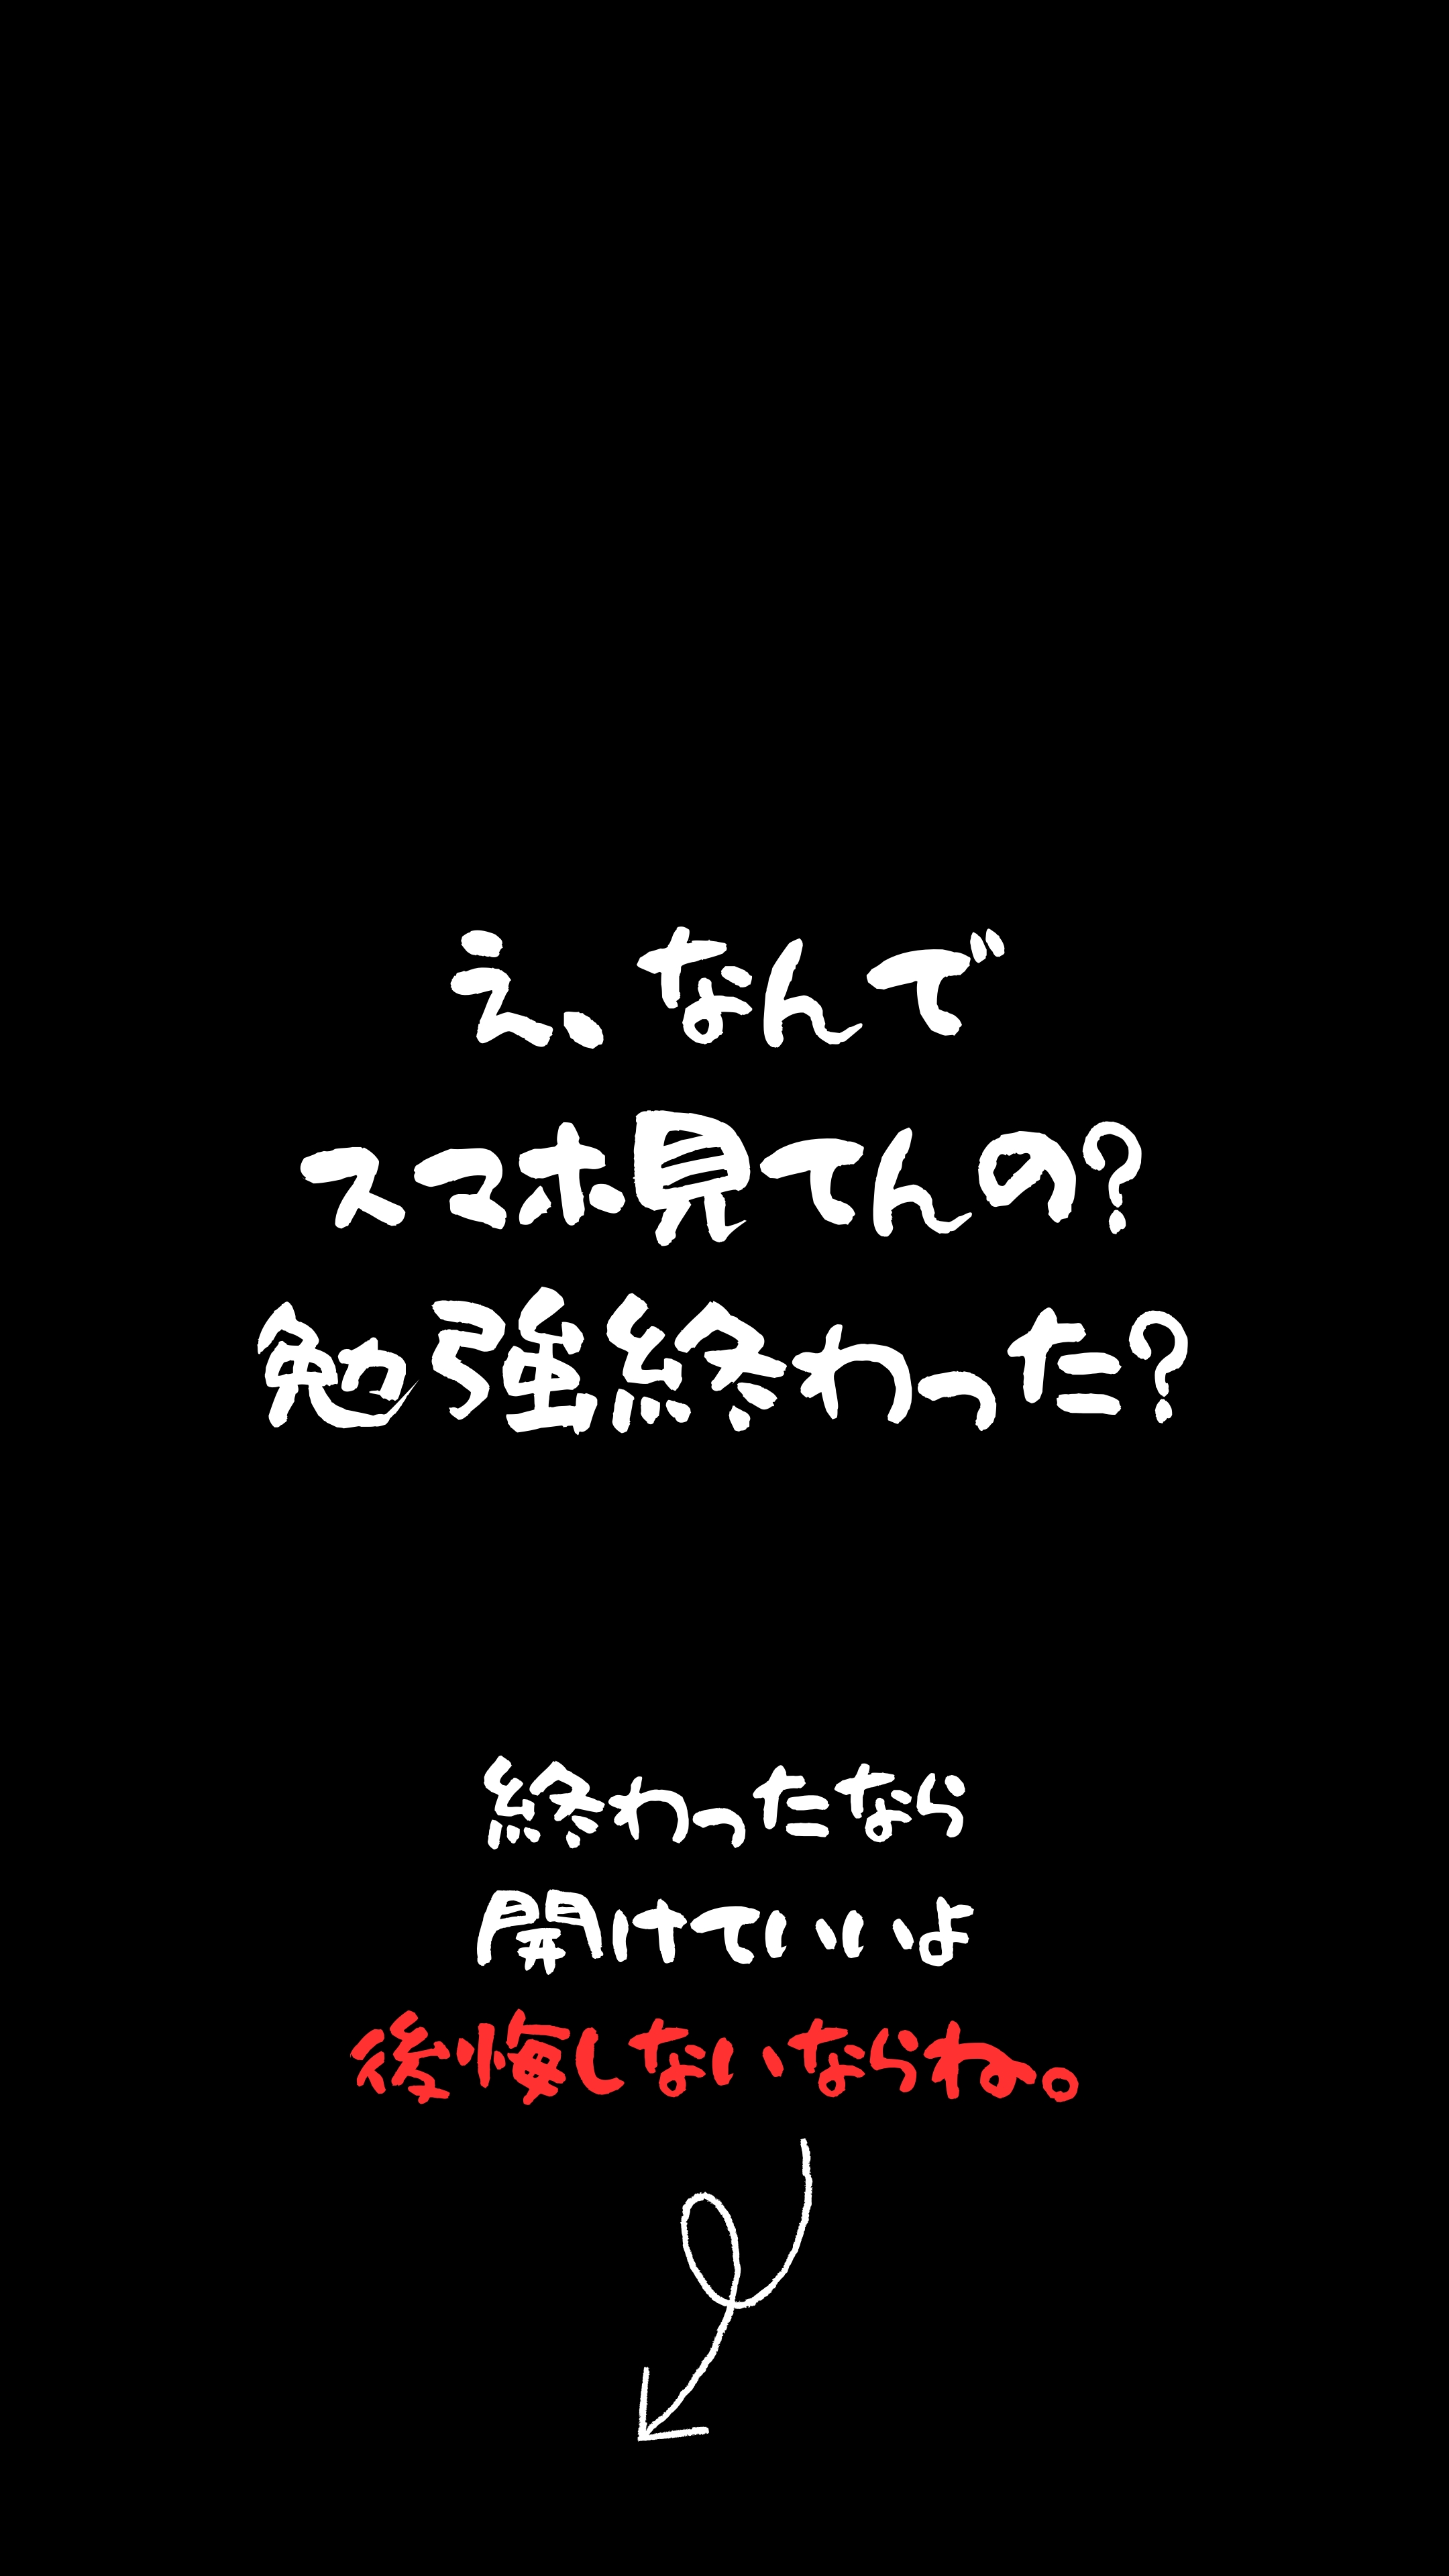 Mysterious Handwritten Japanese Question on Black Tapéta[5ae7481a6d774cc0a166]